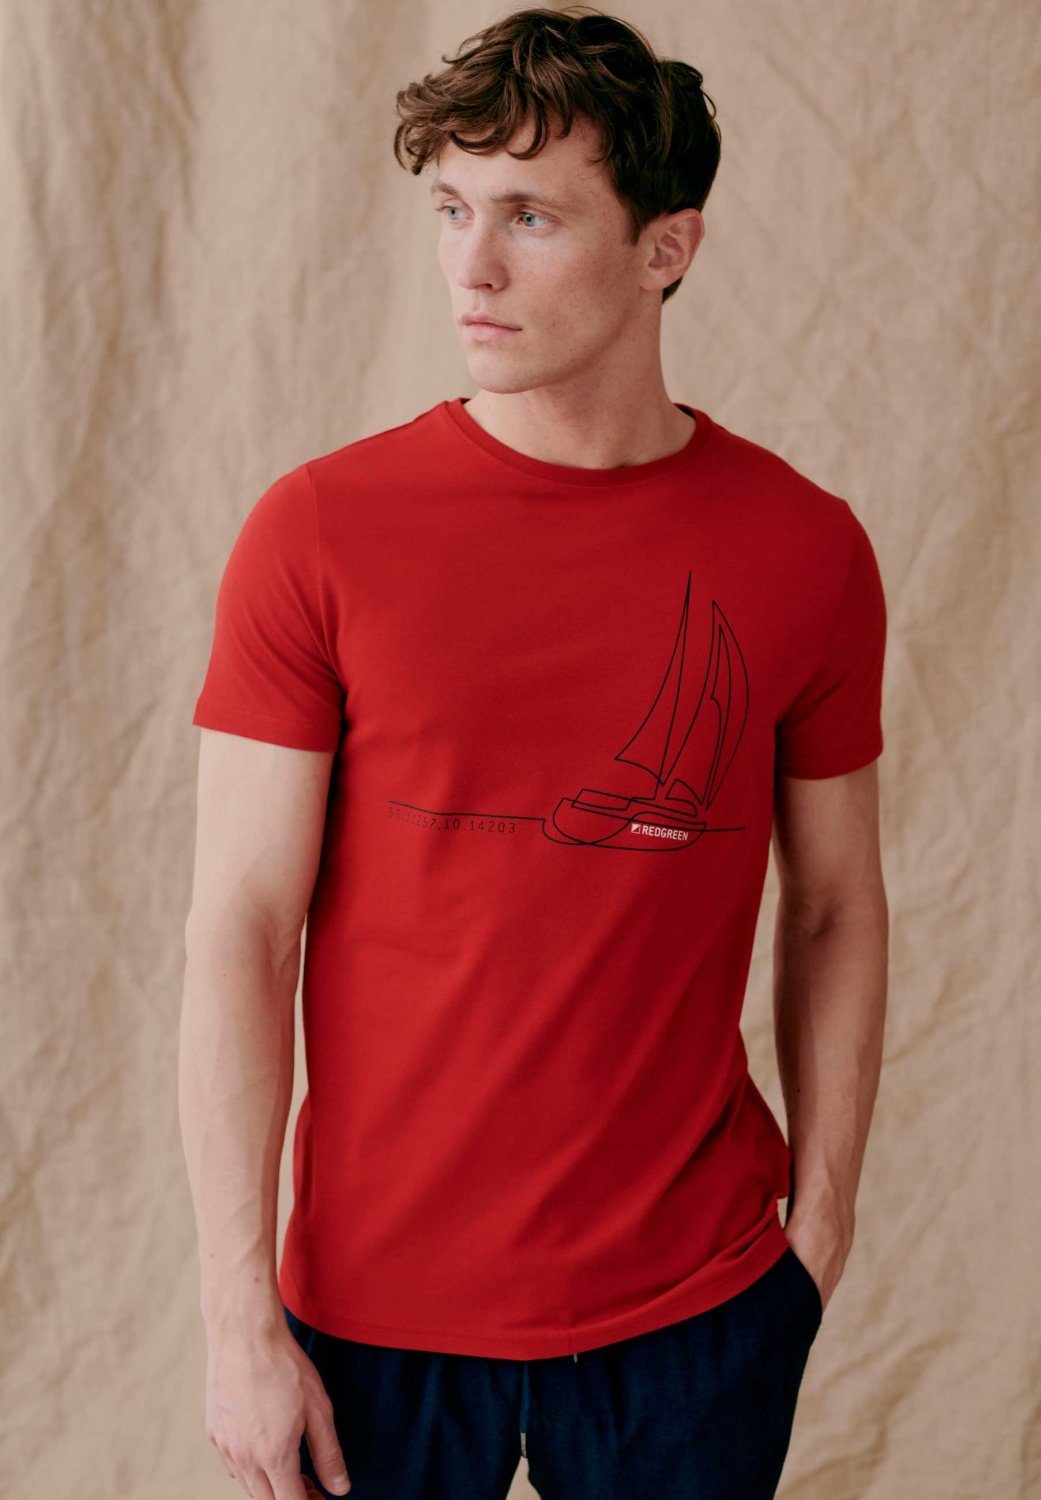 Segelboot mit Print-Shirt Chet REDGREEN rot Print